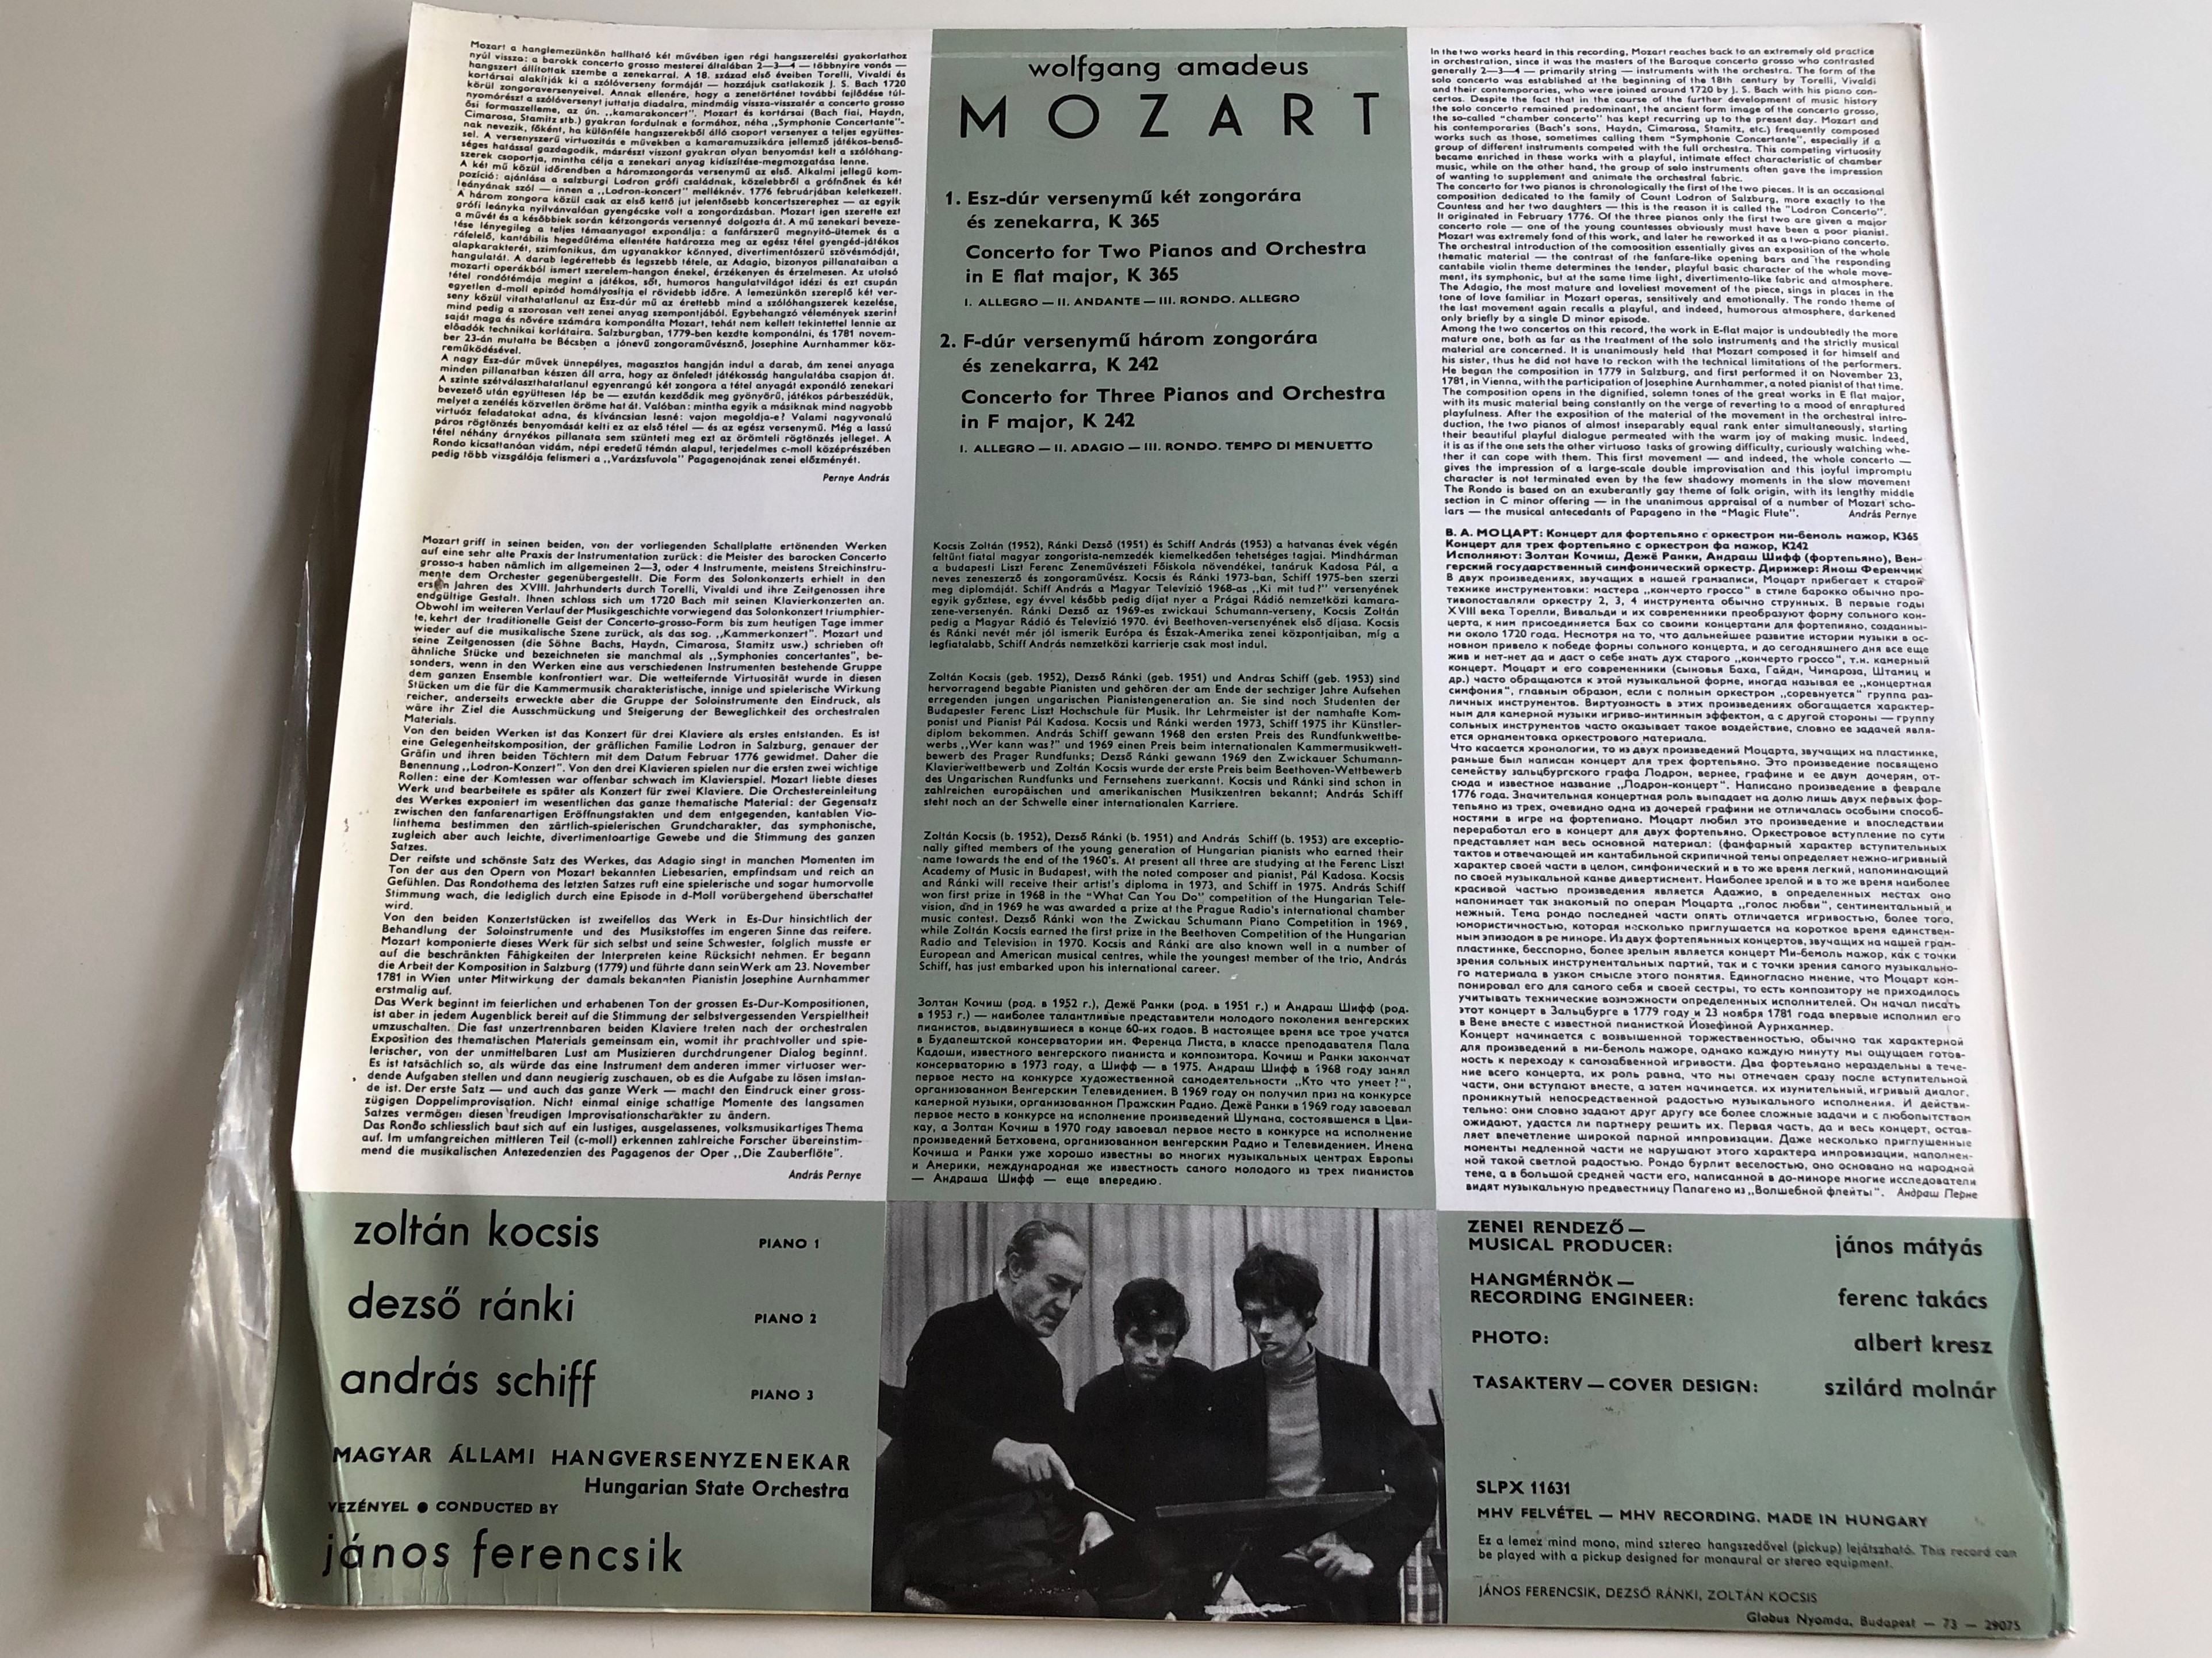 mozart-concerti-for-two-and-three-pianos-zoltan-kocsis-andras-schiff-dezso-ranki-hungarian-state-orchestra-janos-ferencsik-hungaroton-lp-stereo-mono-slpx-11-631-3-.jpg